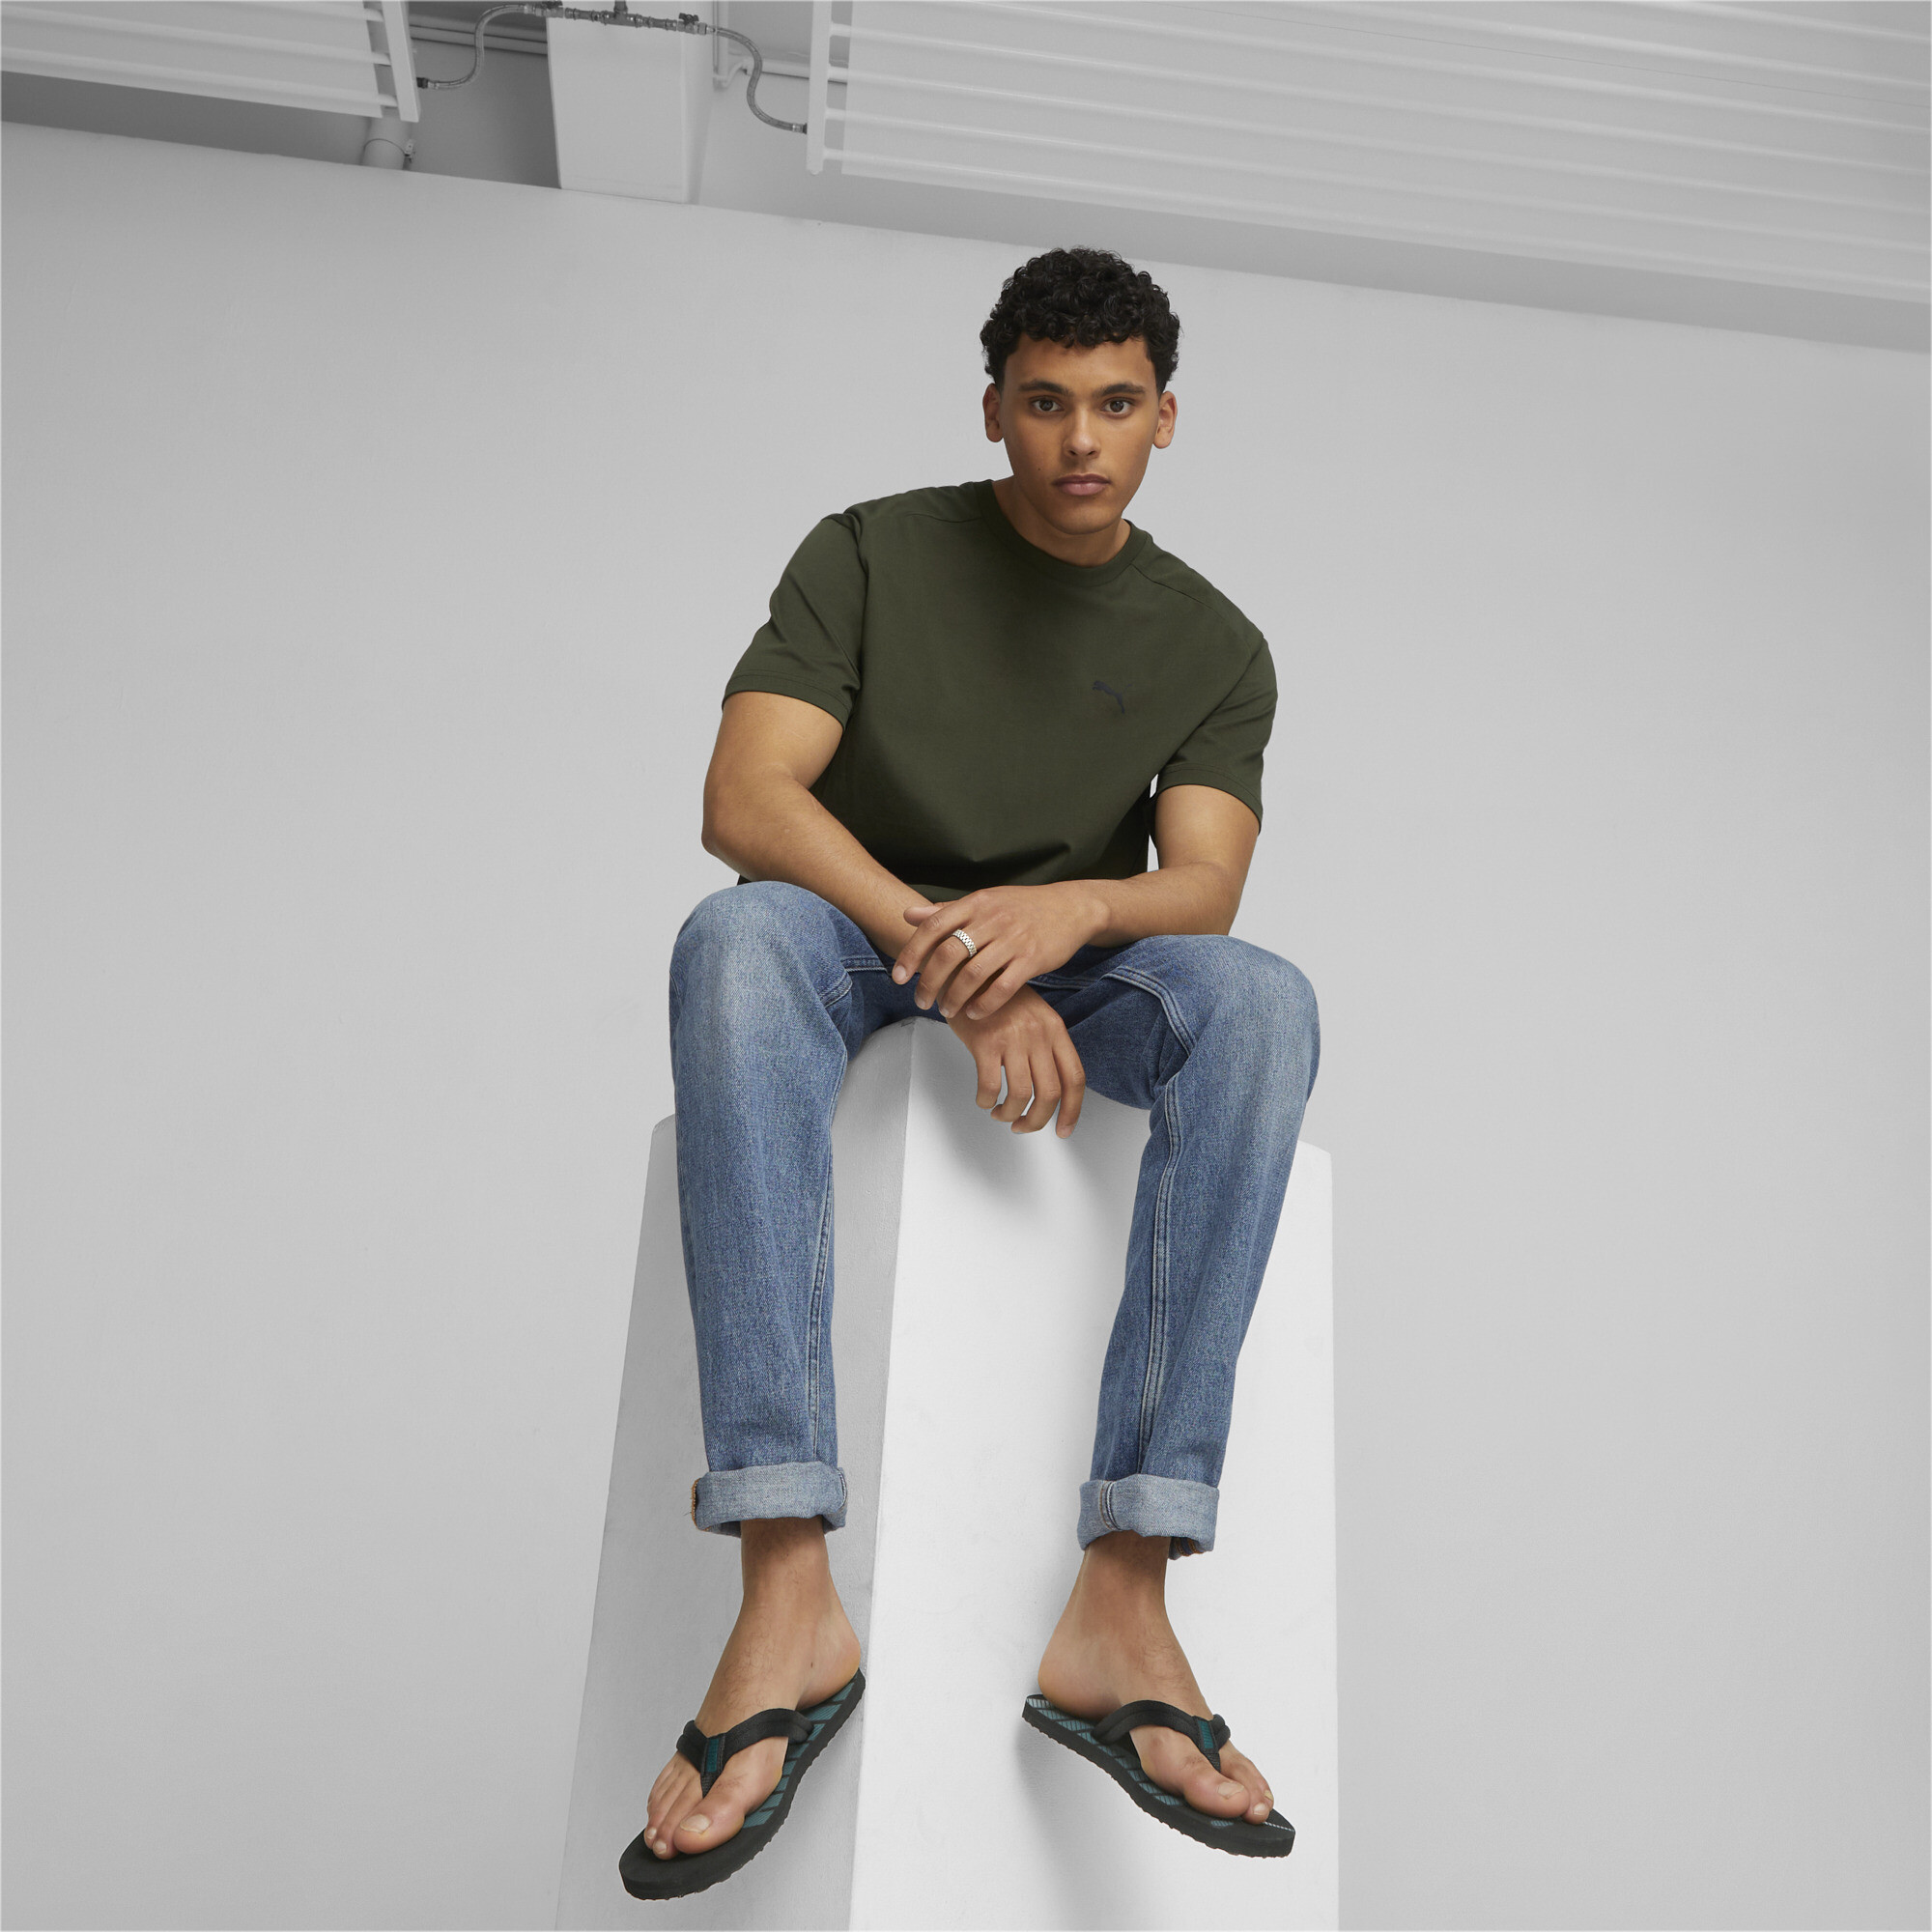 Men's PUMA Epic Flip V2 Sandals In Black, Size EU 48.5